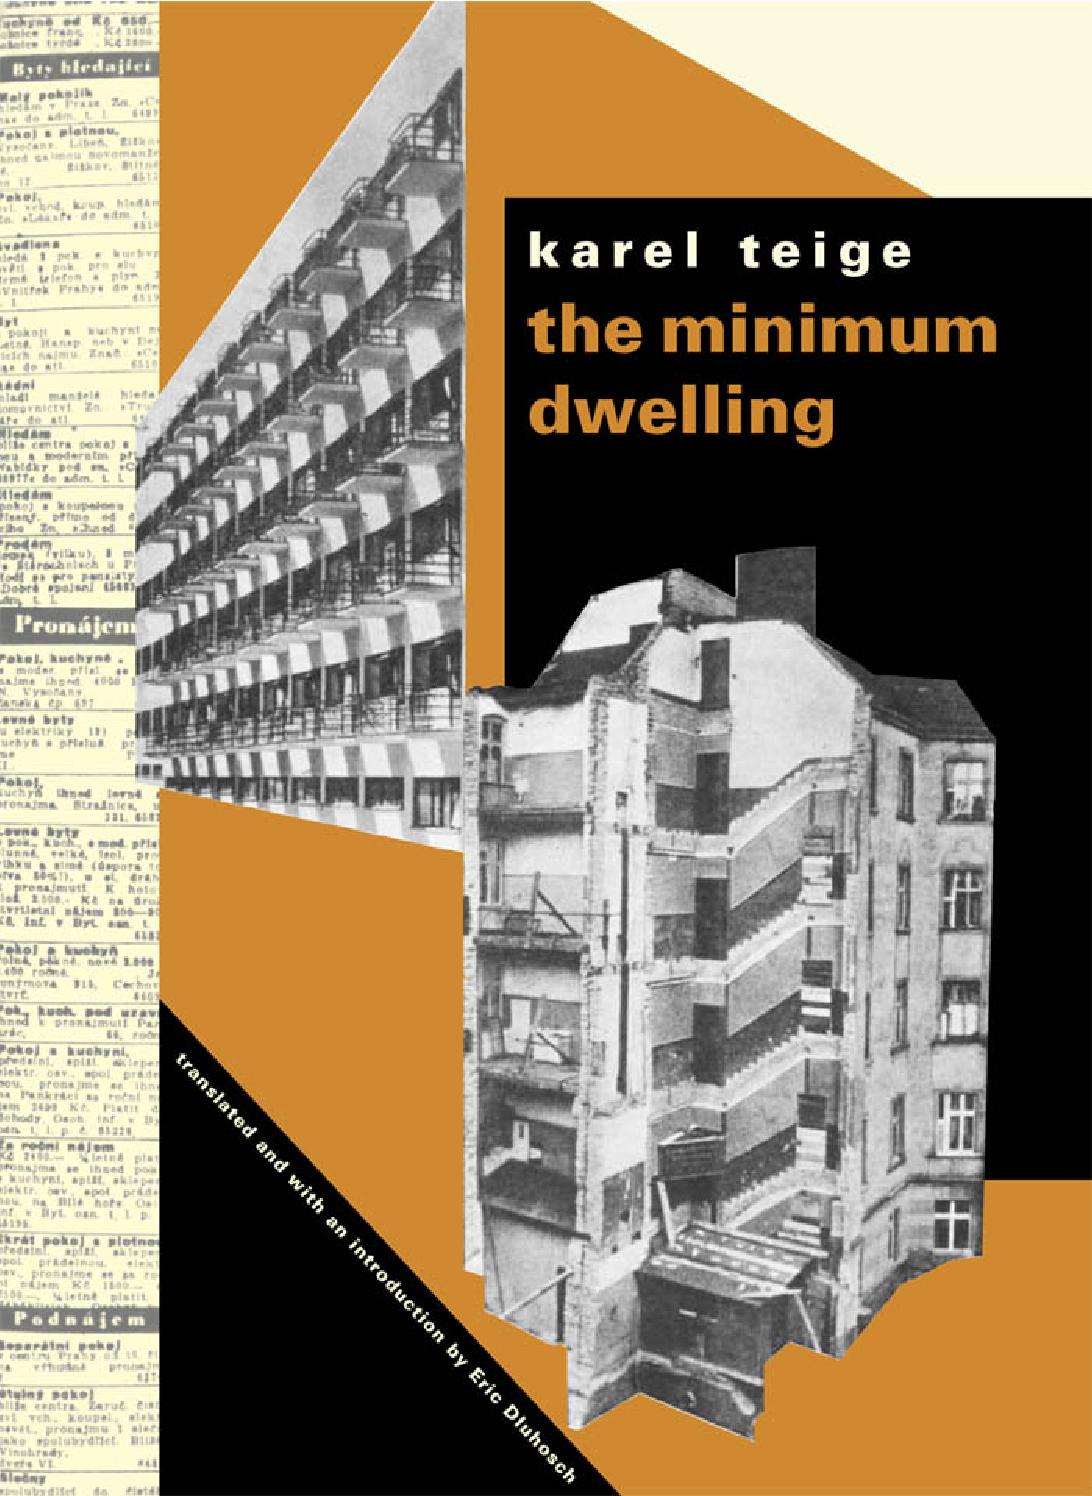 karel teige the minimum dwelling 9d442d c